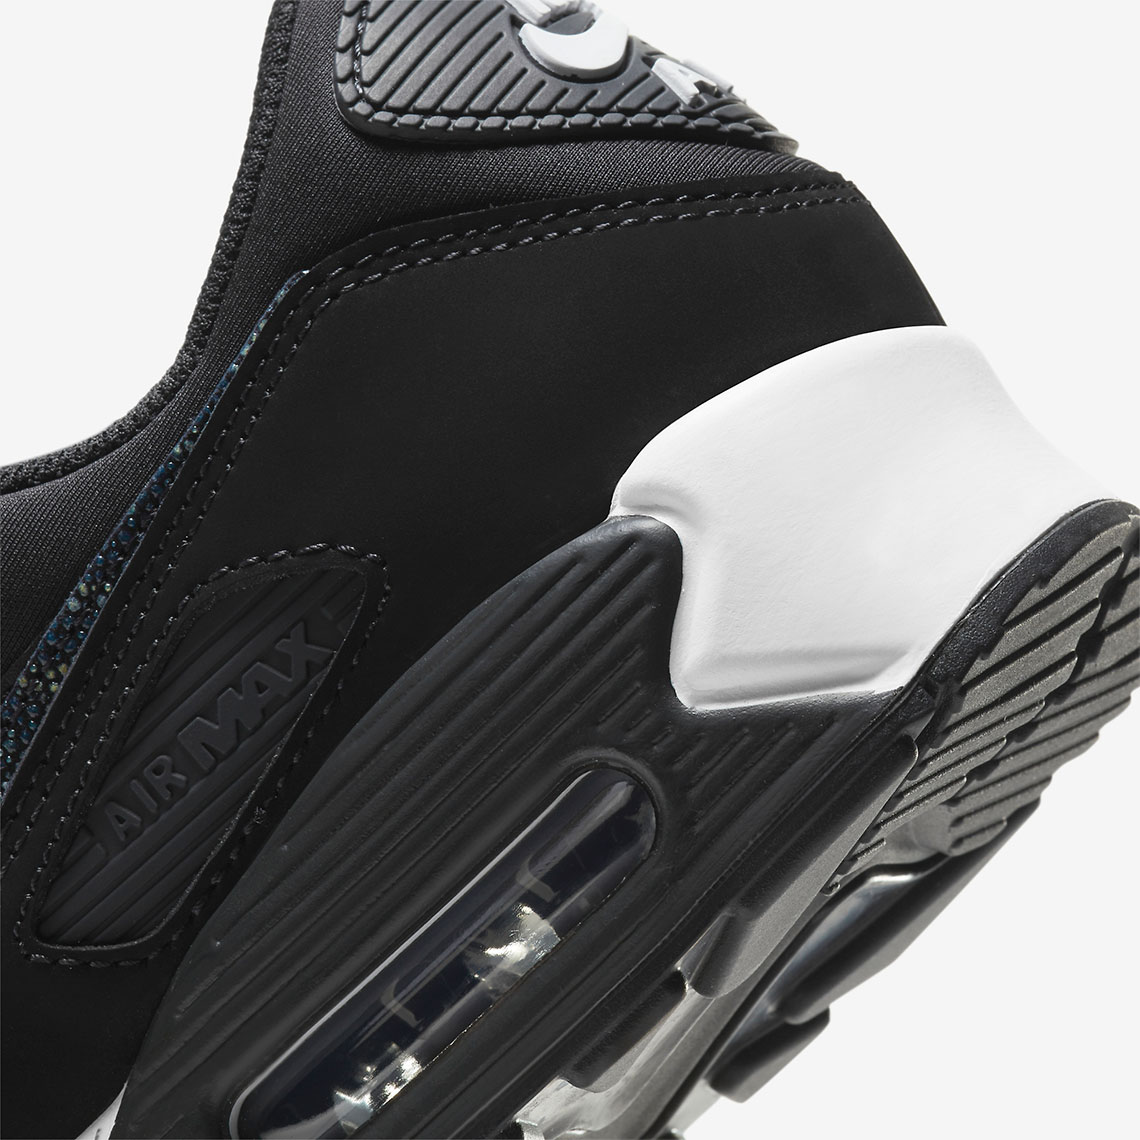 Nike Air Max 90 Black White Safari CV8824-001 | SneakerNews.com